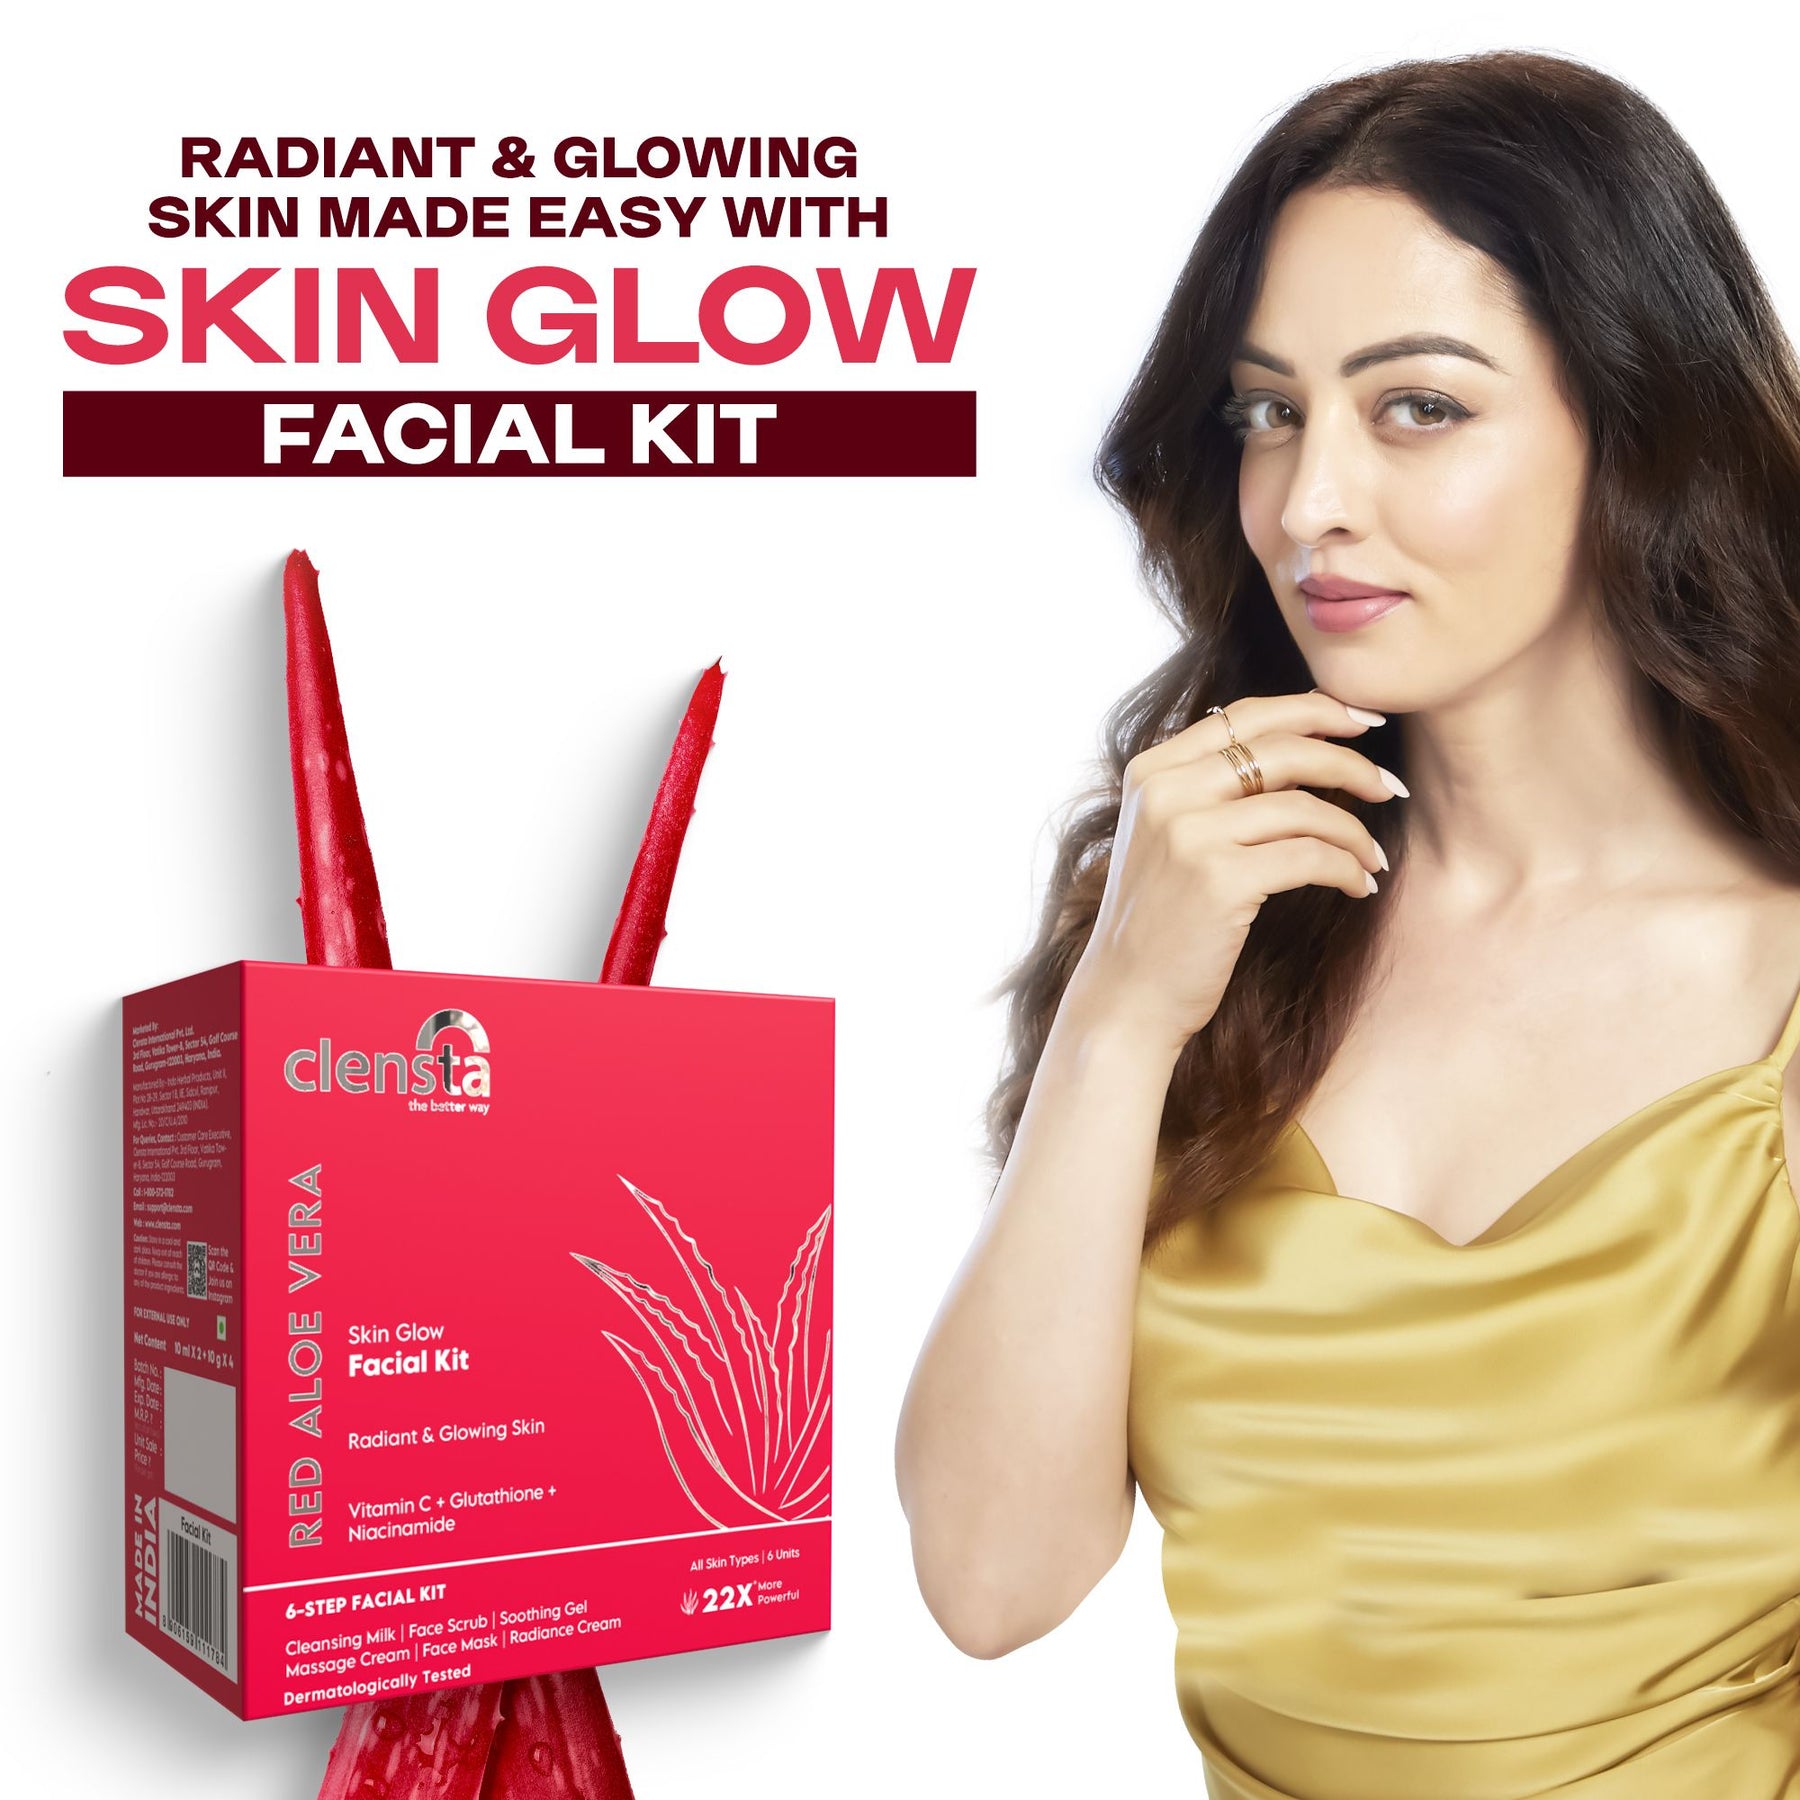 Skin Glow Facial Kit With Red Aloe Vera, Vitamin C, Glutathione & Niacinamide For Glowing Skin